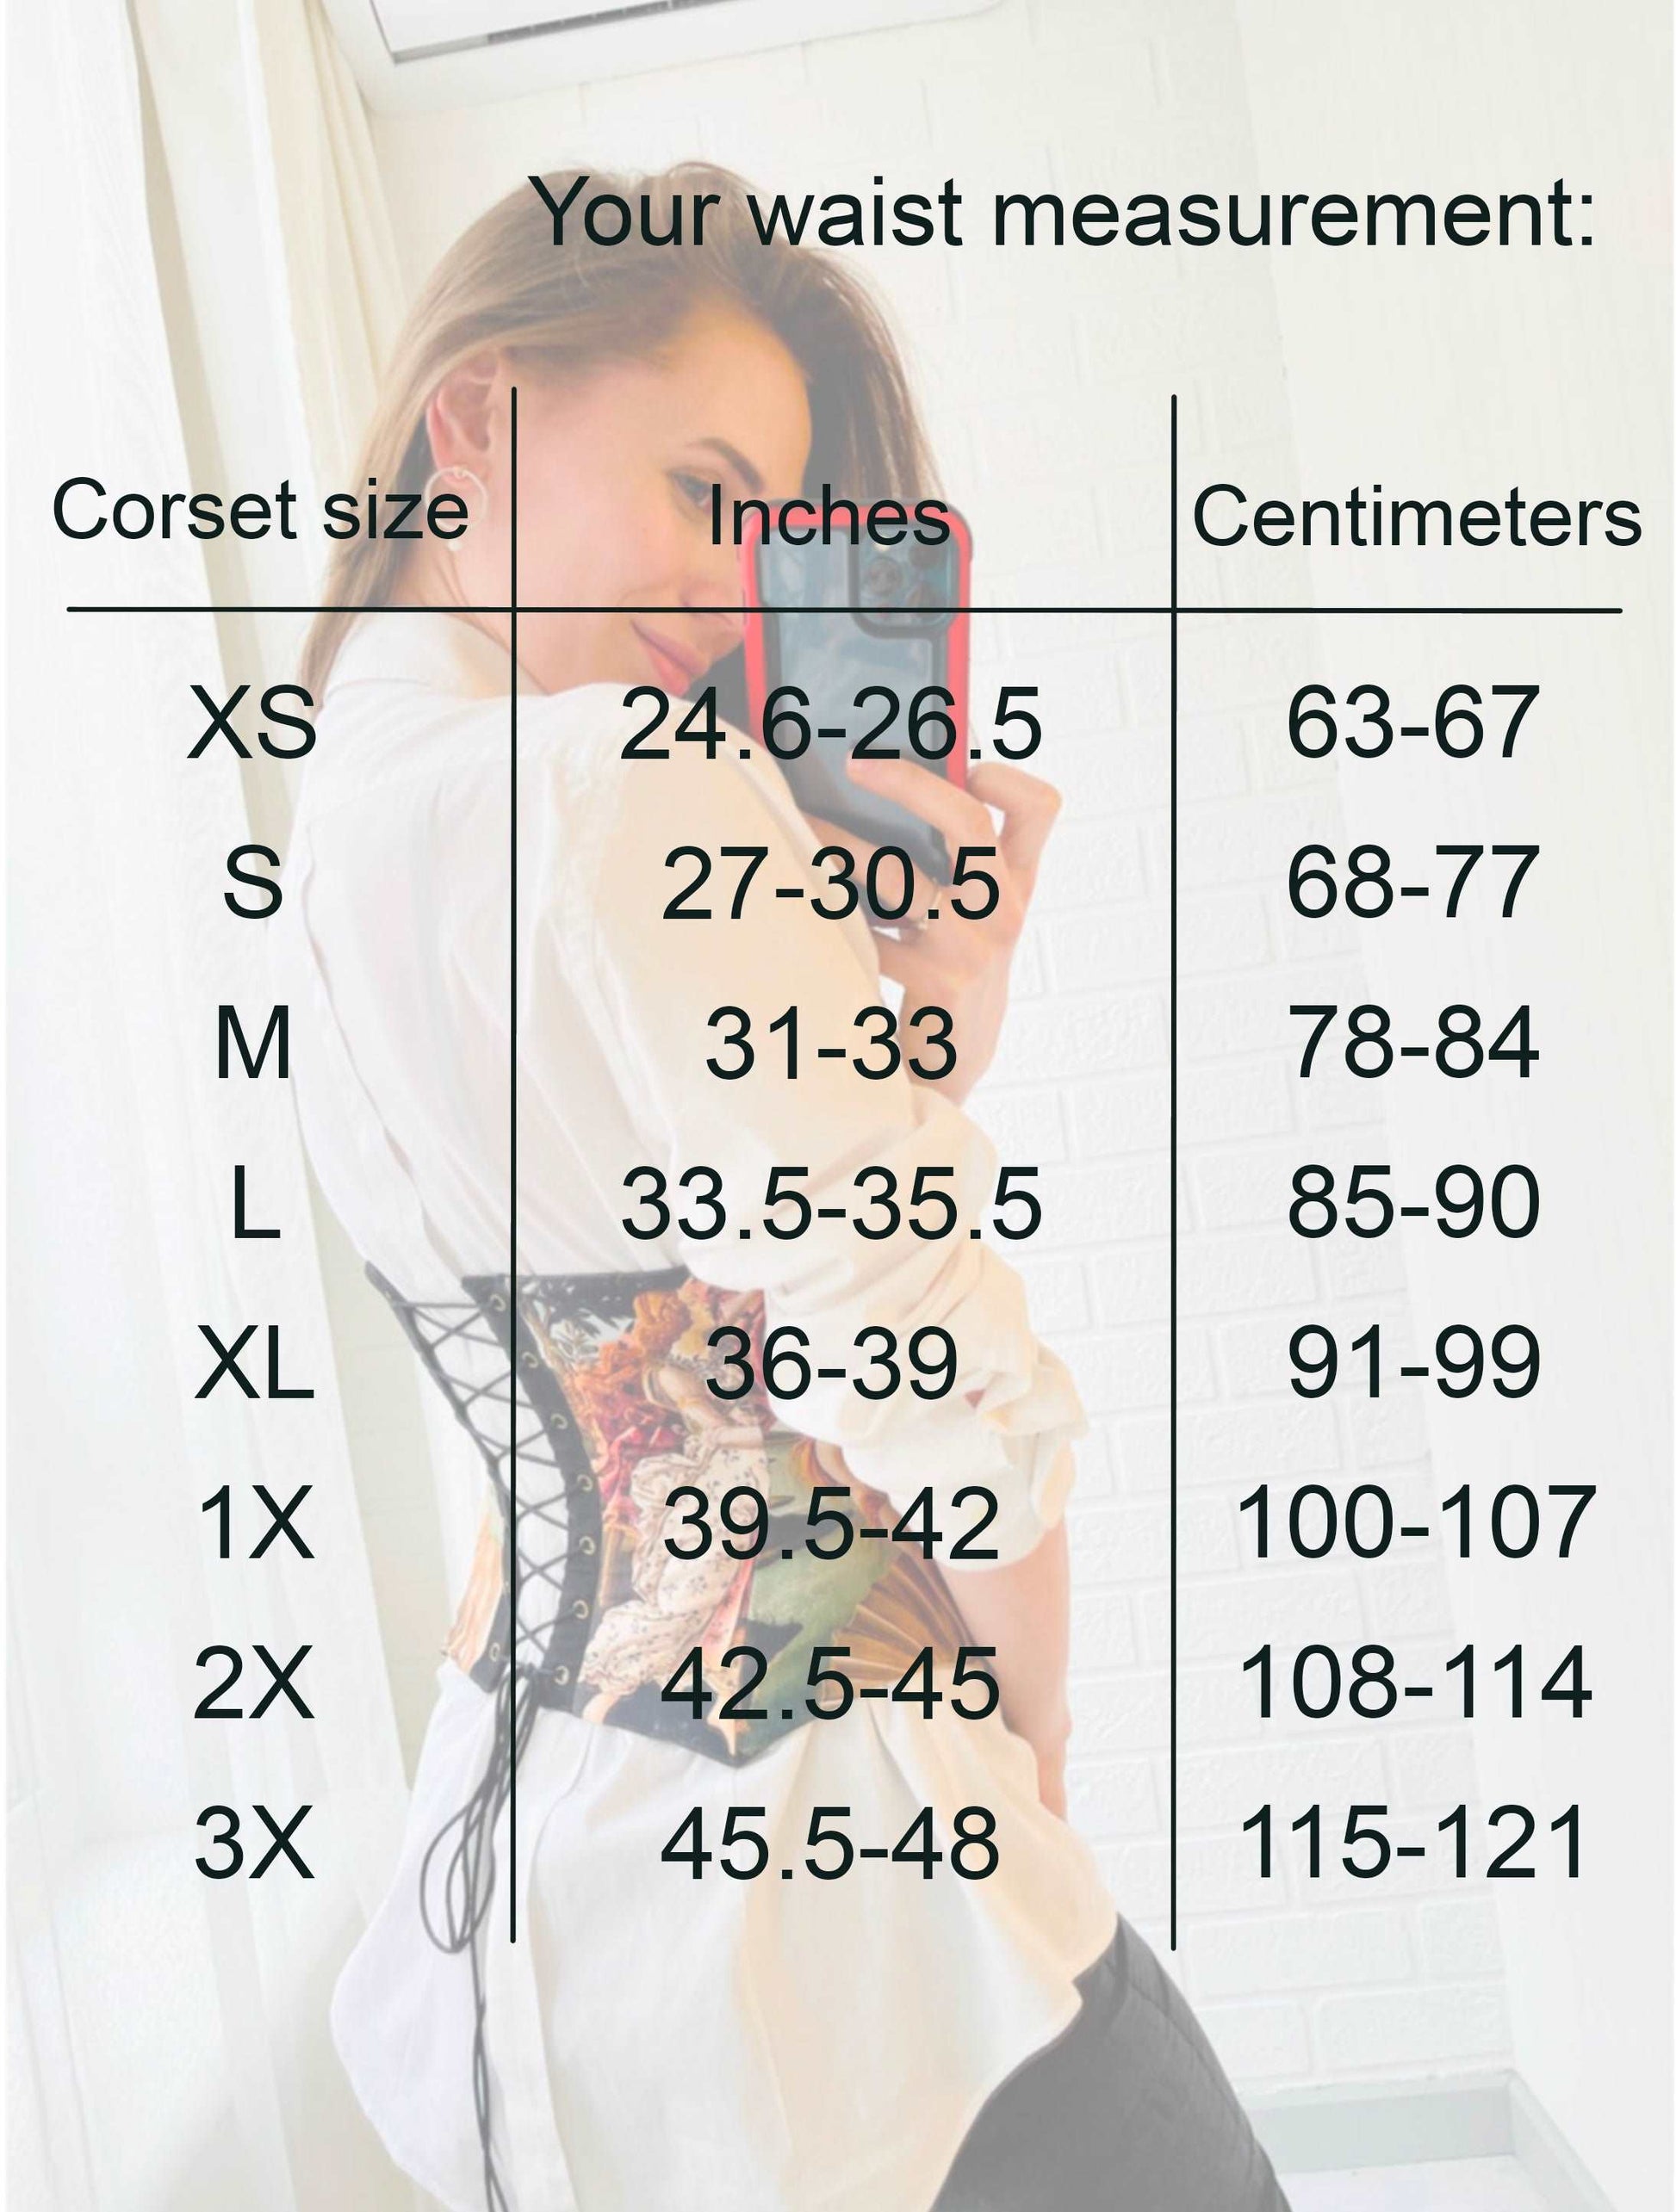 Venus corset size chart with waist measurement